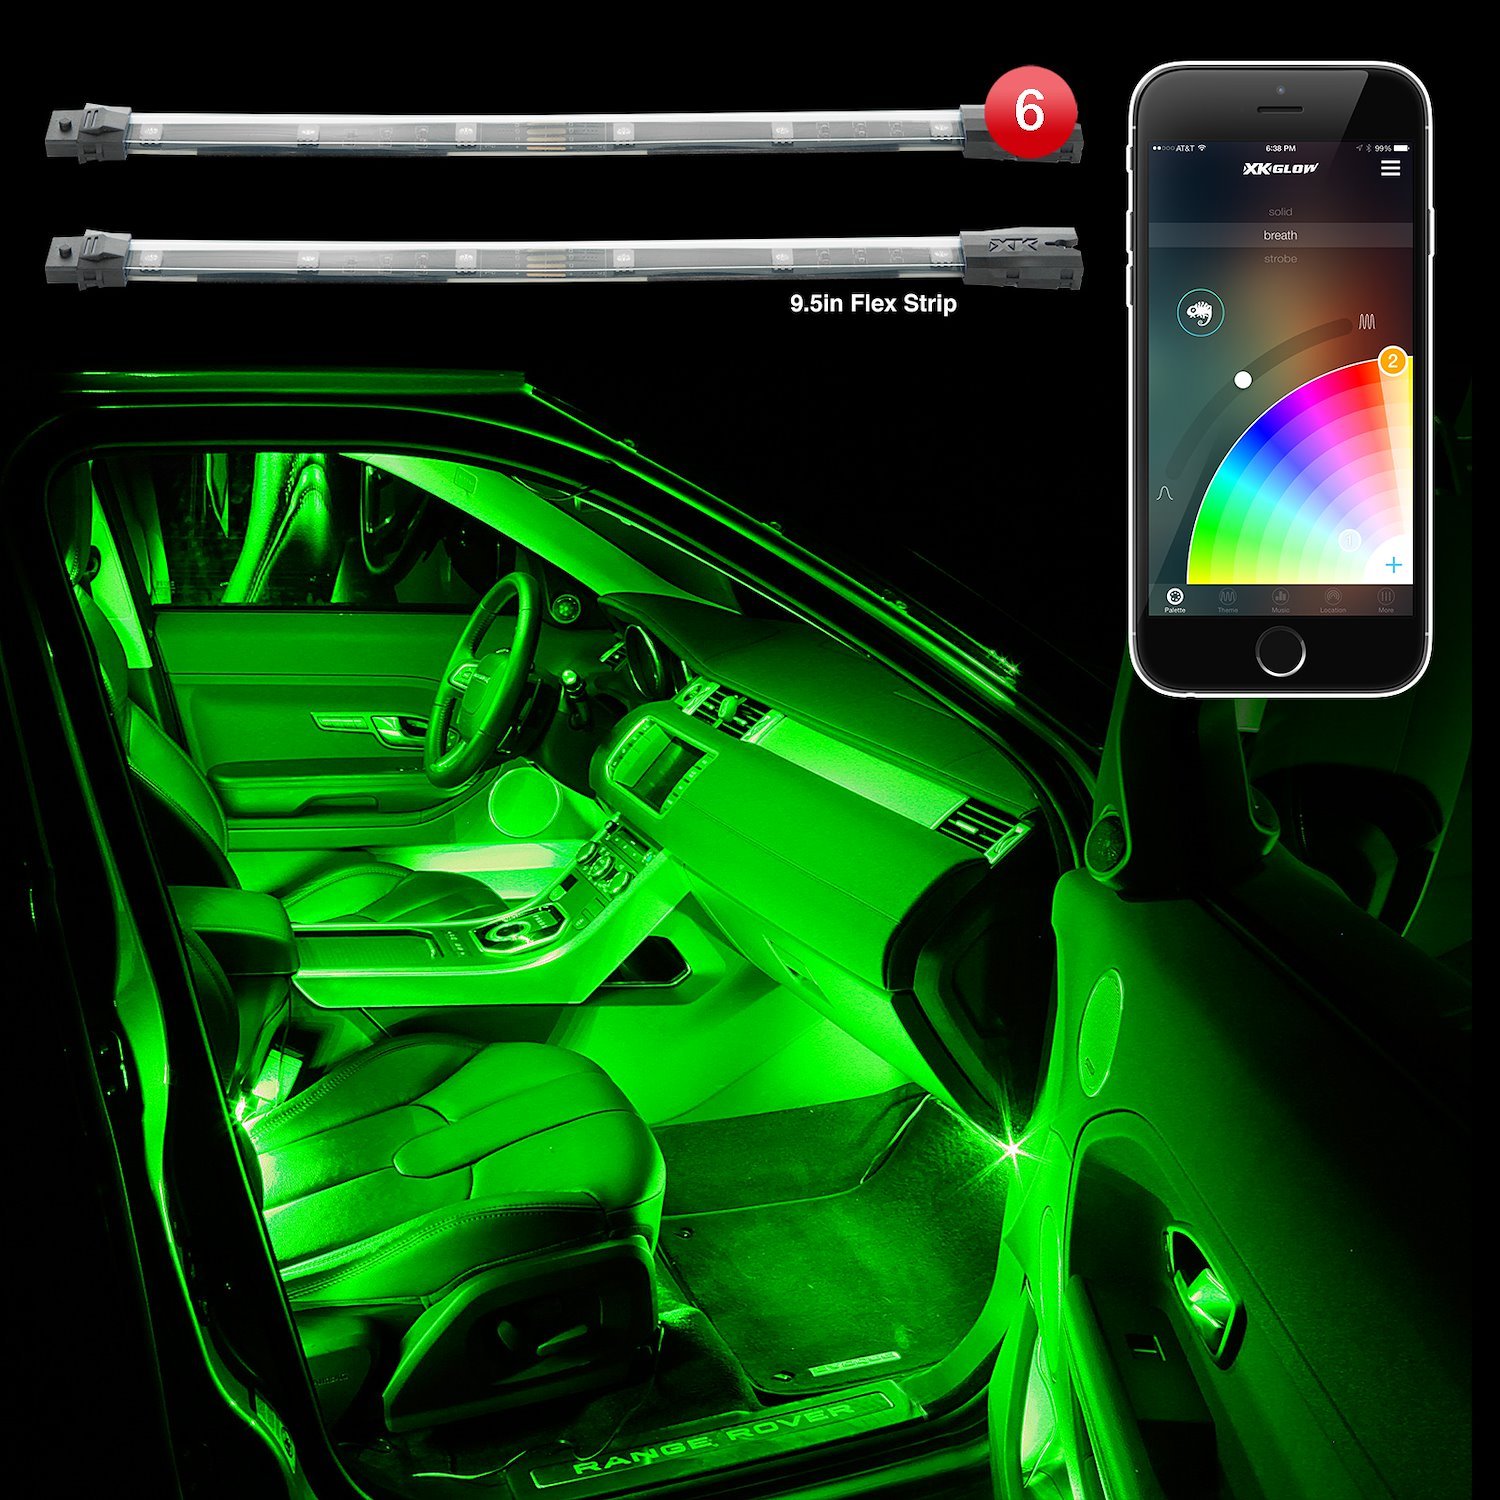 KS-CAR-MINI 6 x 10 in. Flex Strip Million Color Undercar Kit, XCHROME Smartphone App Control, Universal Fit